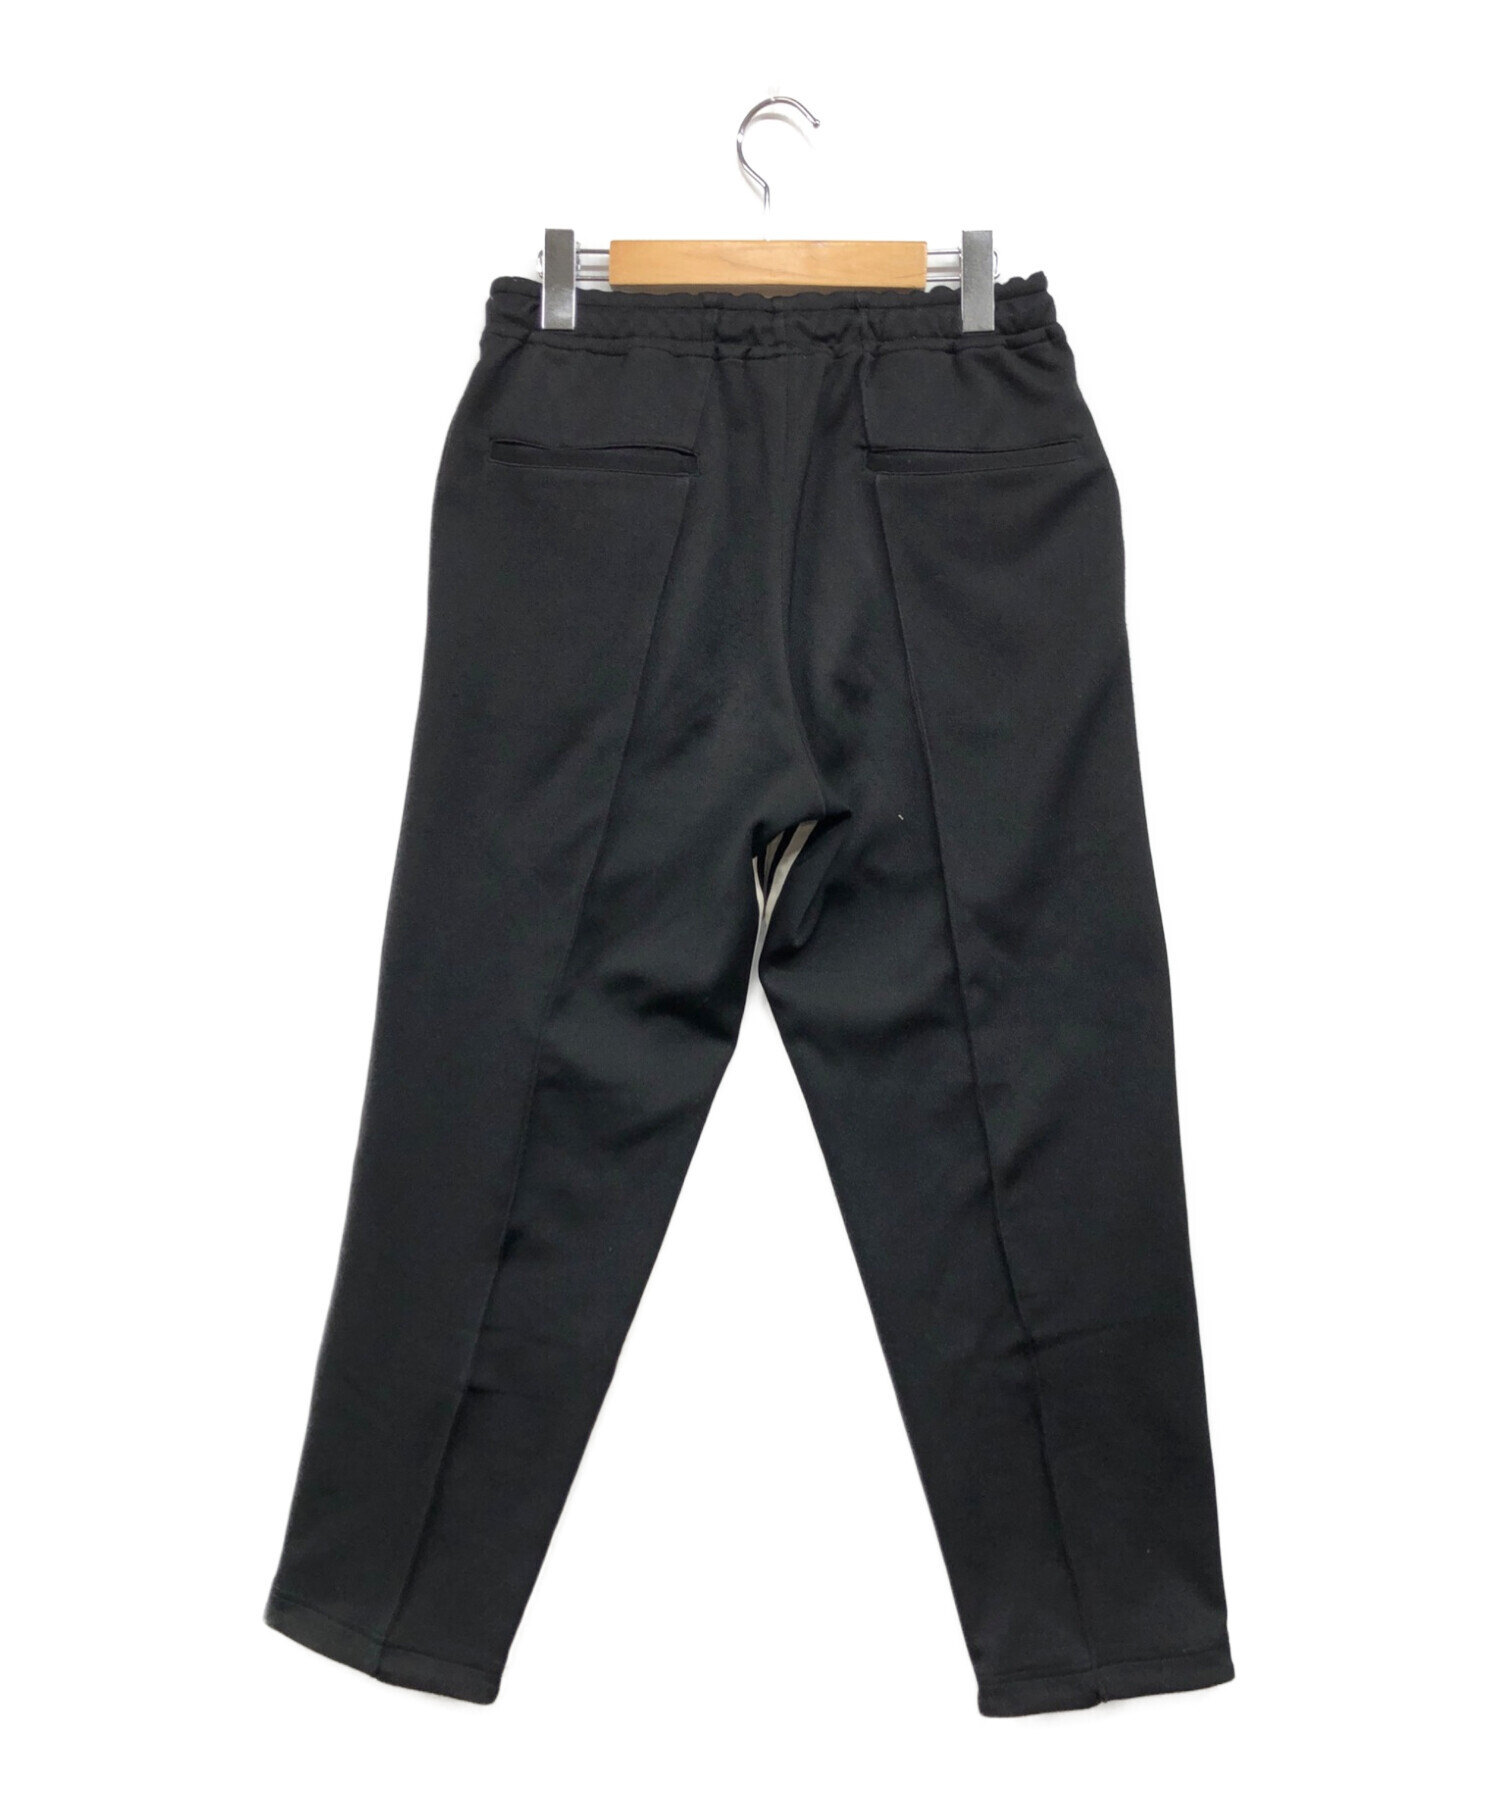 Y-3 (ワイスリー) 3Stripes Cropped Track Pants ブラック サイズ:S